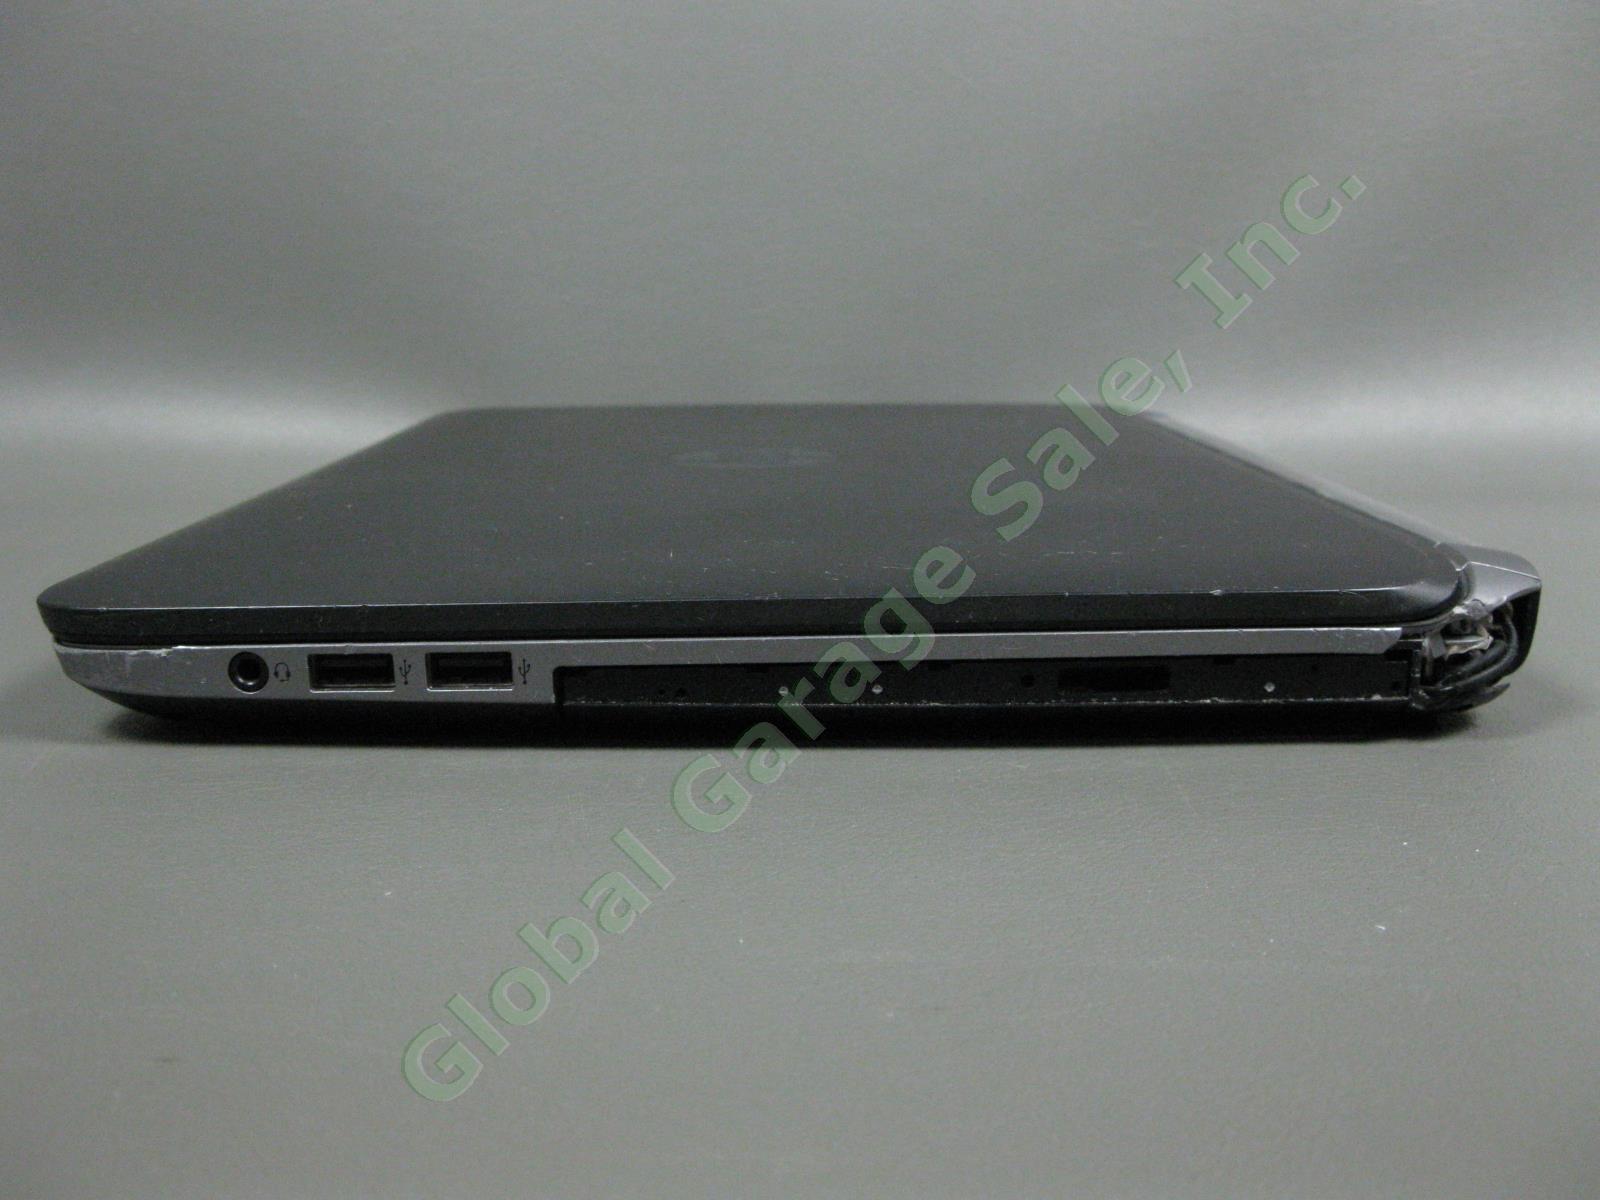 HP ProBook Black Laptop 440 G2 i5-5200U 2.20GHz 4GB RAM 460GB HD Windows 10 Pro 7